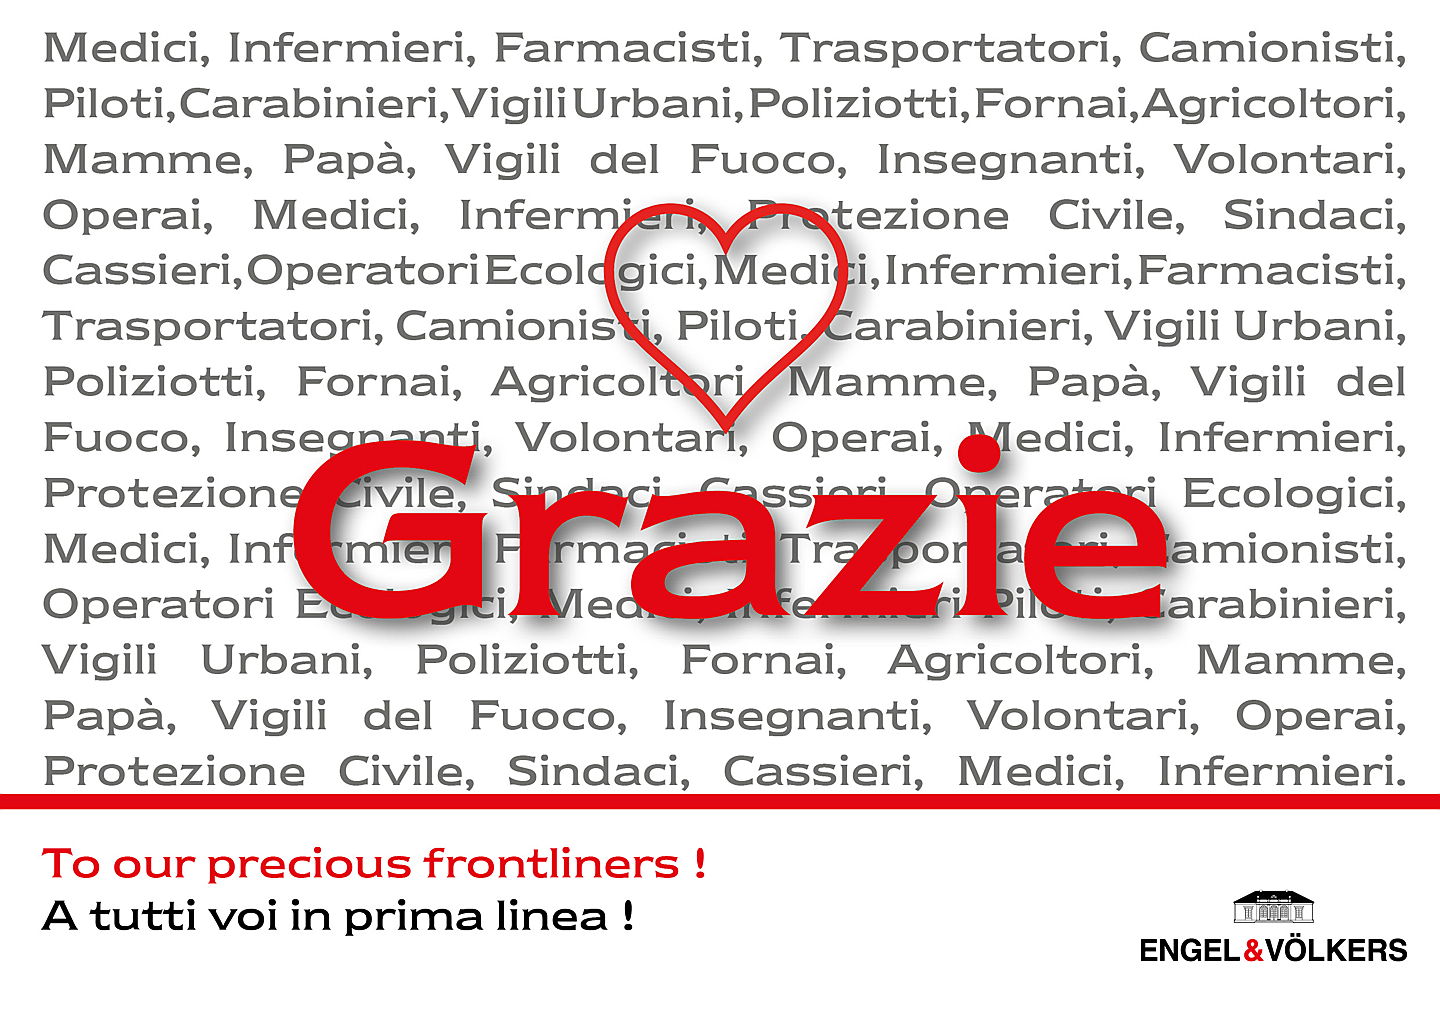  Parma
- grazie_al (2).jpg